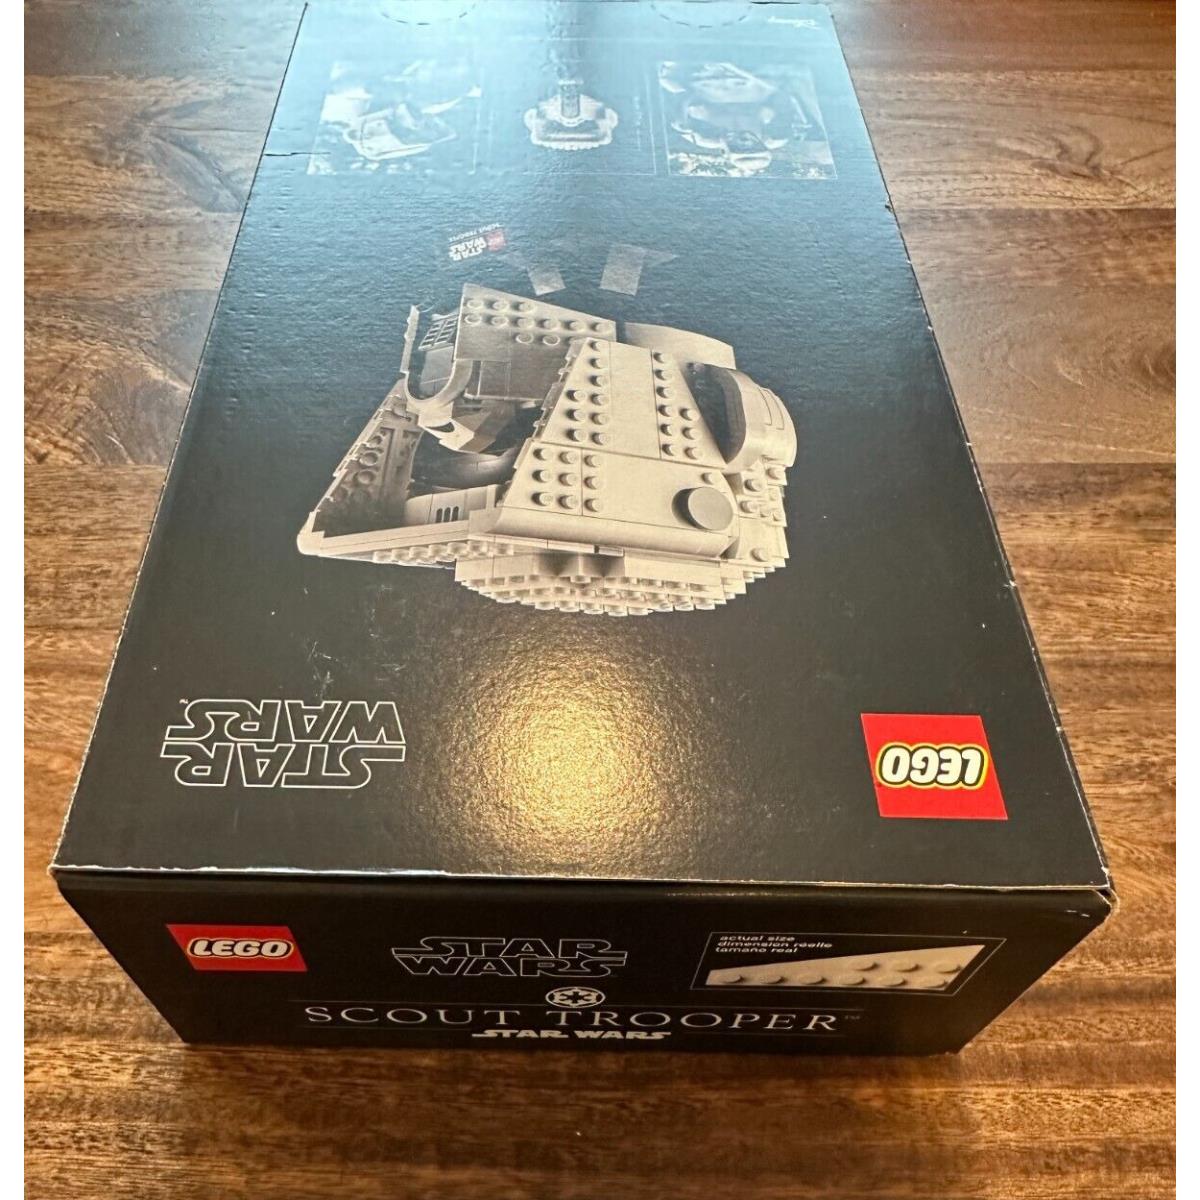 Lego Star Wars 75305: Scout Trooper Helmet - Retired Box